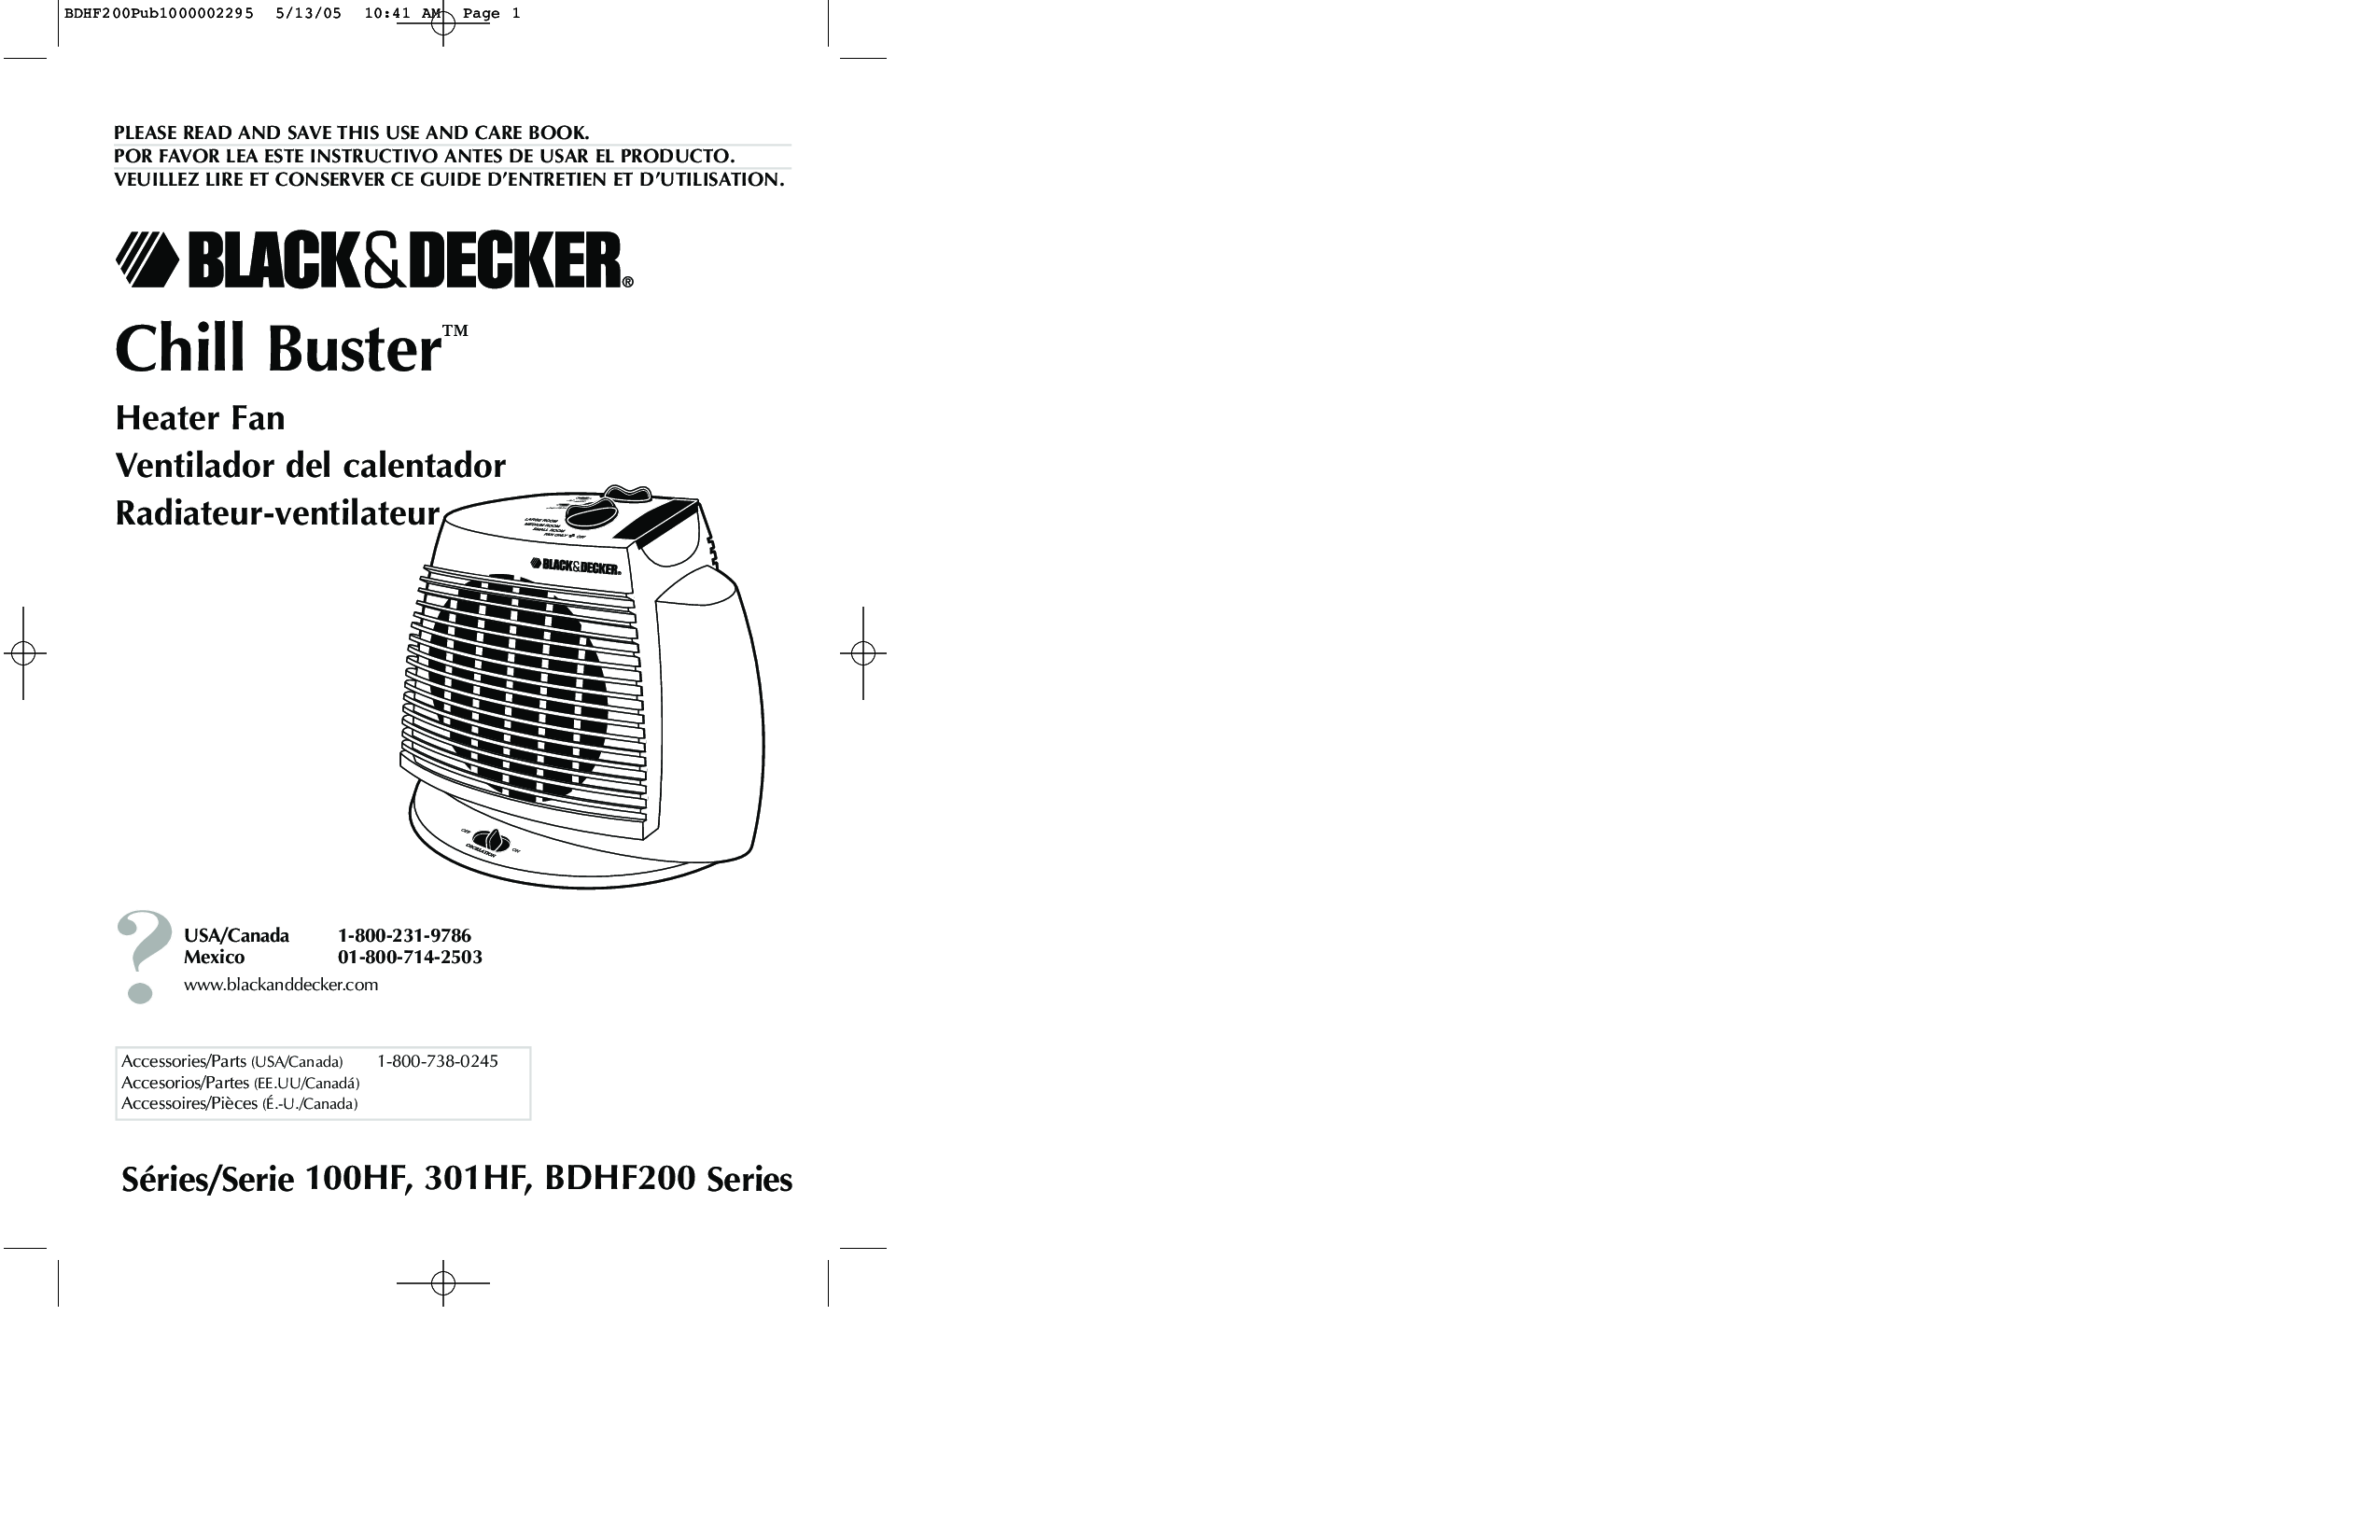 Black & Decker 300HF User Manual